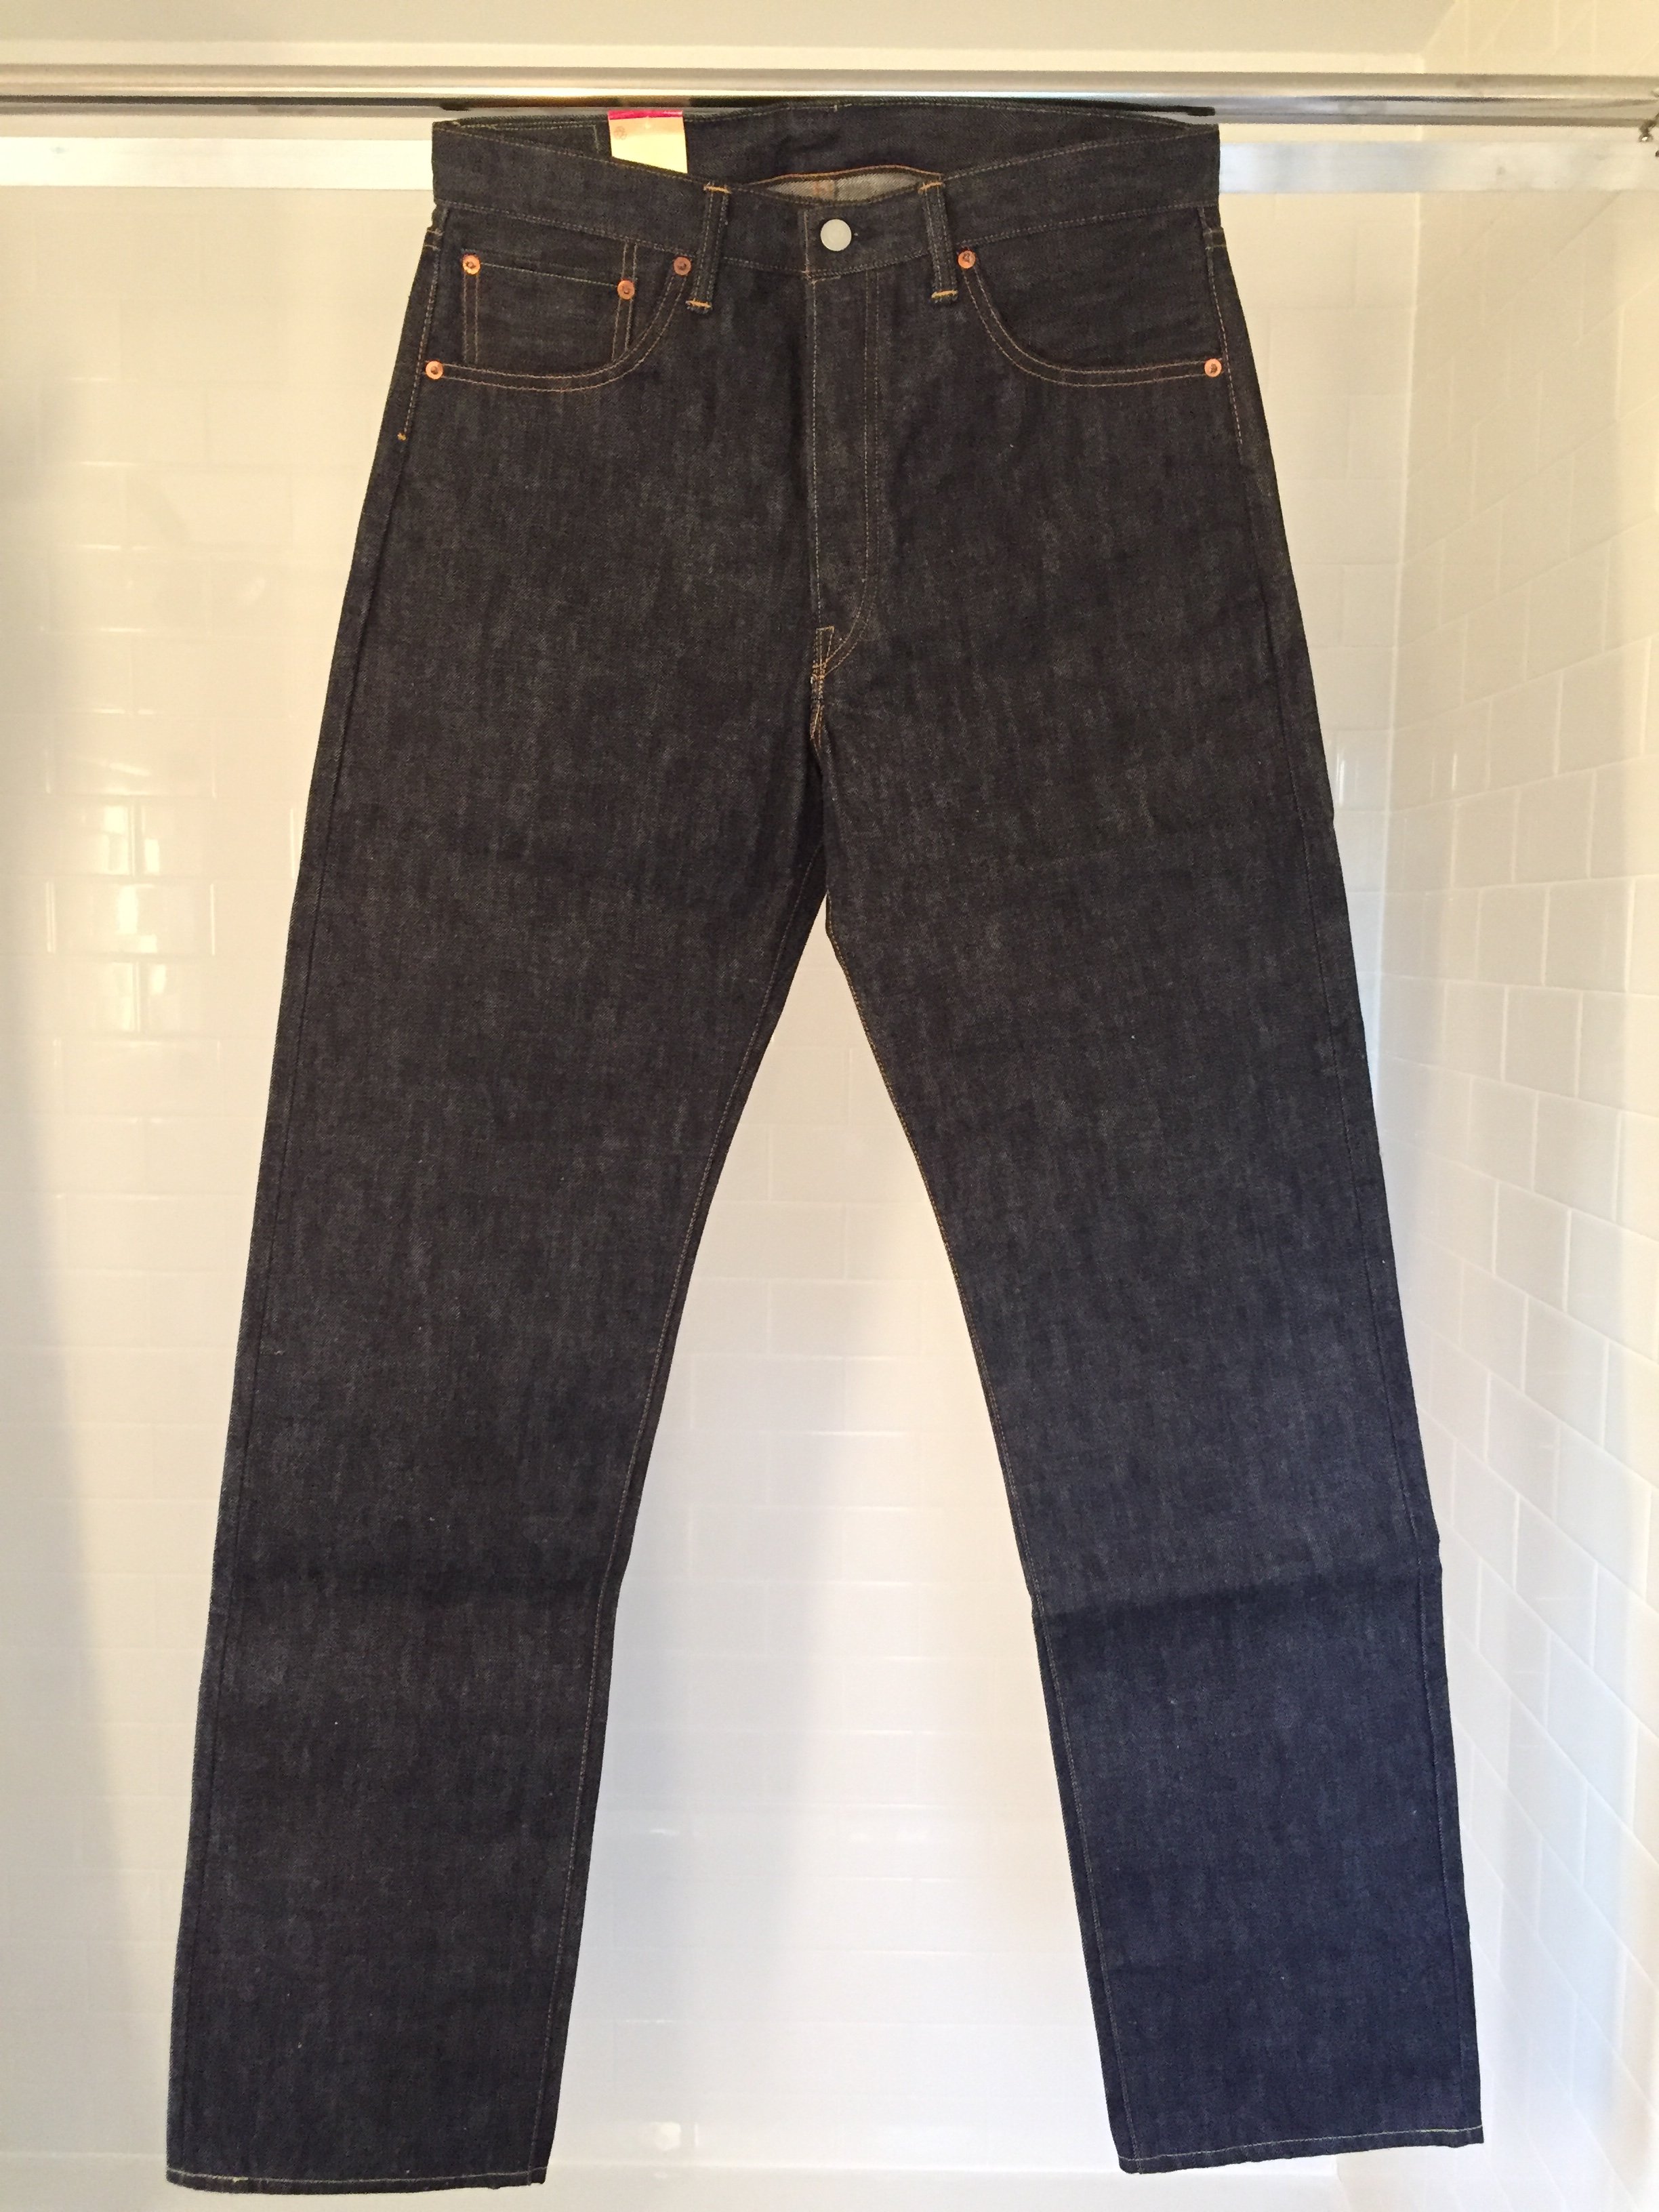 My first selvedge denim : Momotaro Jeans 0306-12SP | Page 4 | Vintage ...